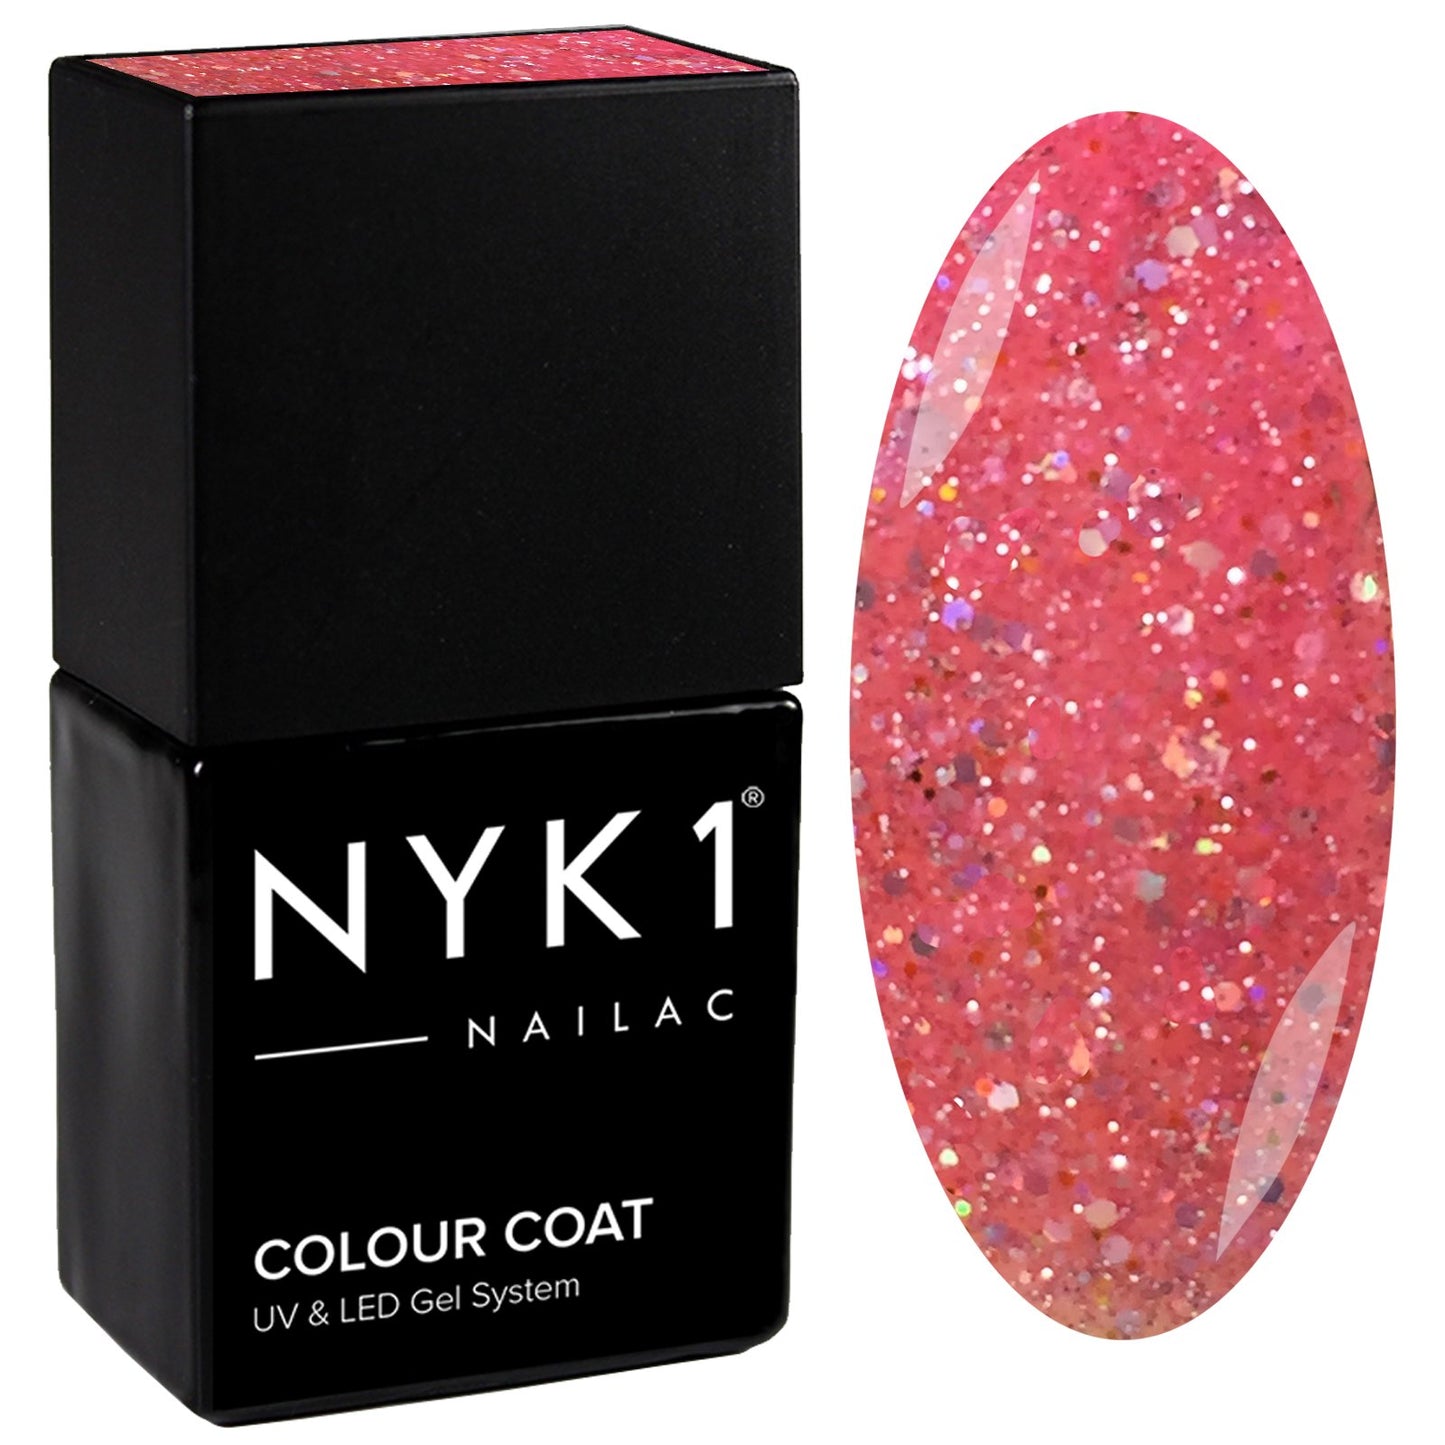 NYK1 Diamond Ballet Pink Glitter Sparkle Gel Nail Polish